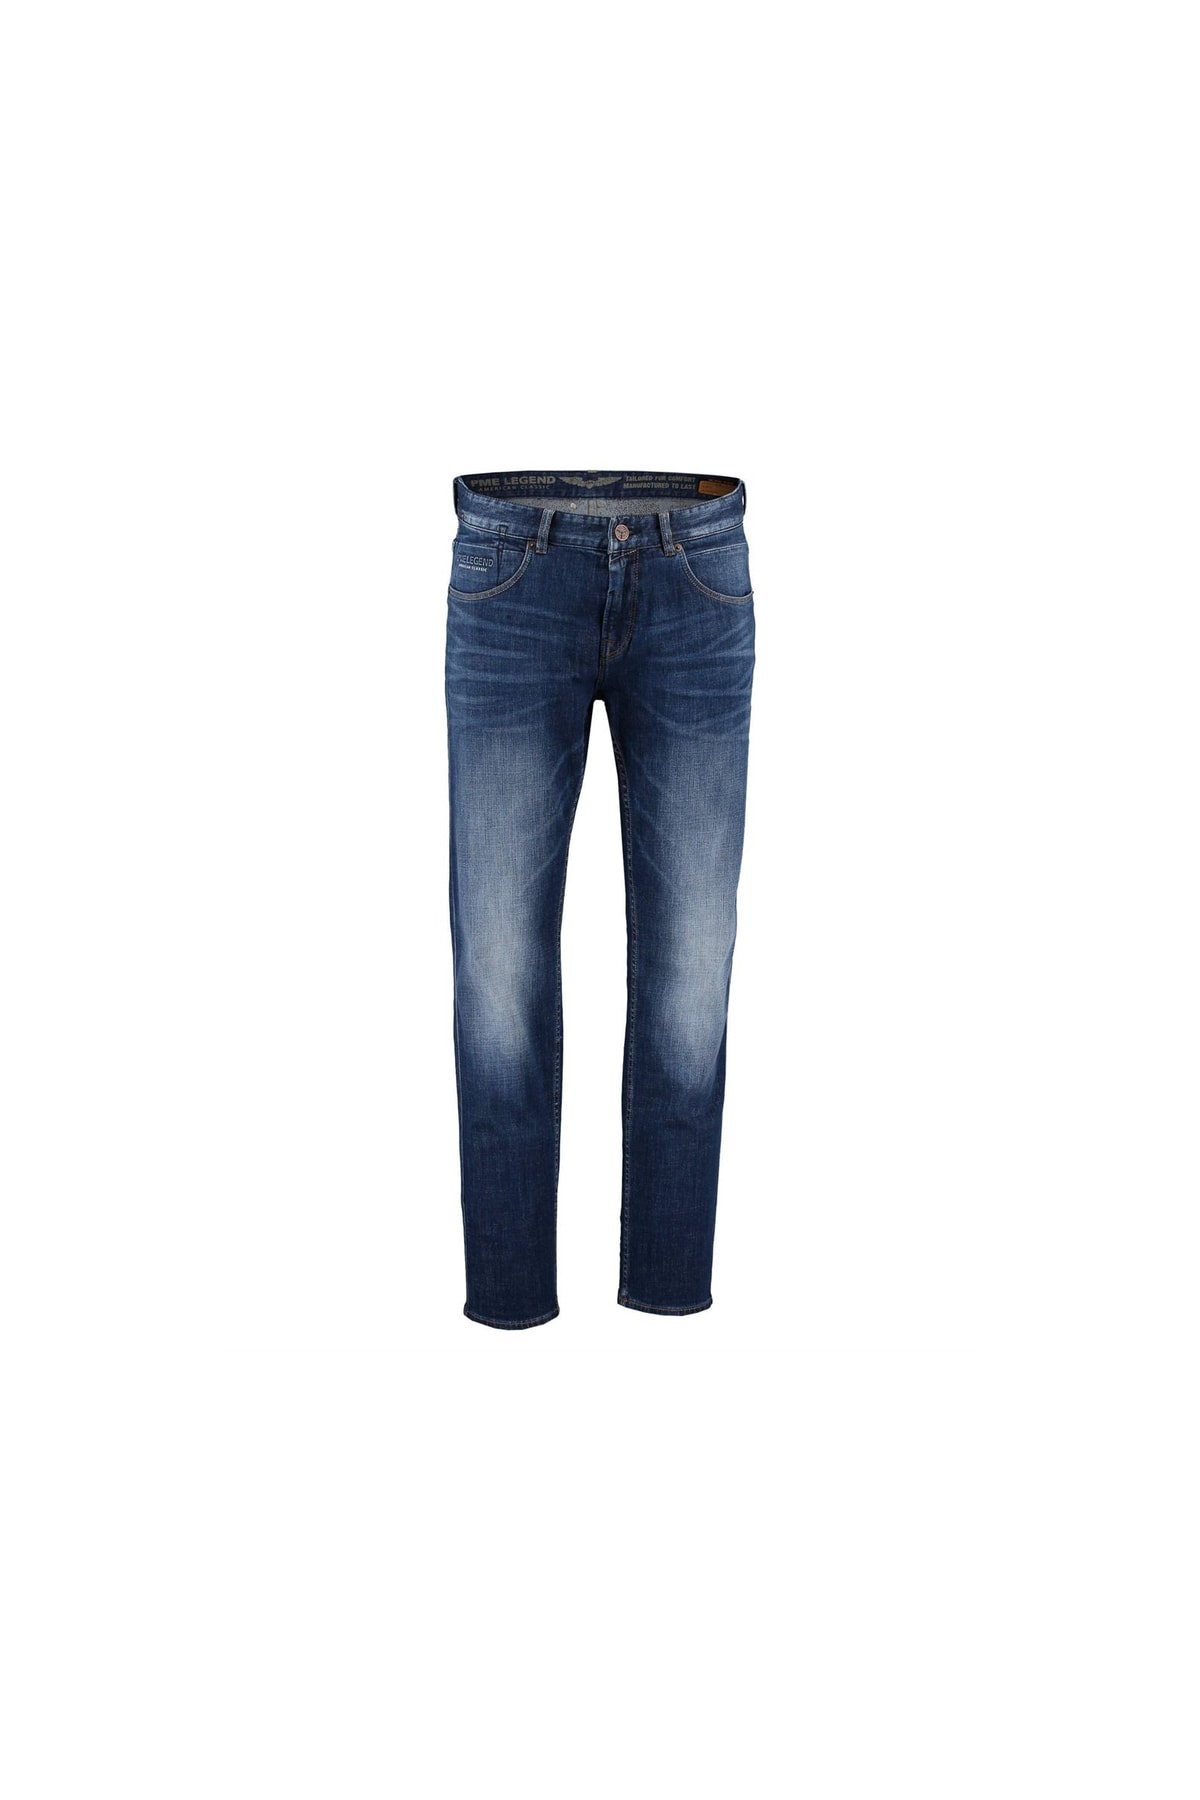 PME LEGEND Jeans Mehrfarbig Straight Fast ausverkauft